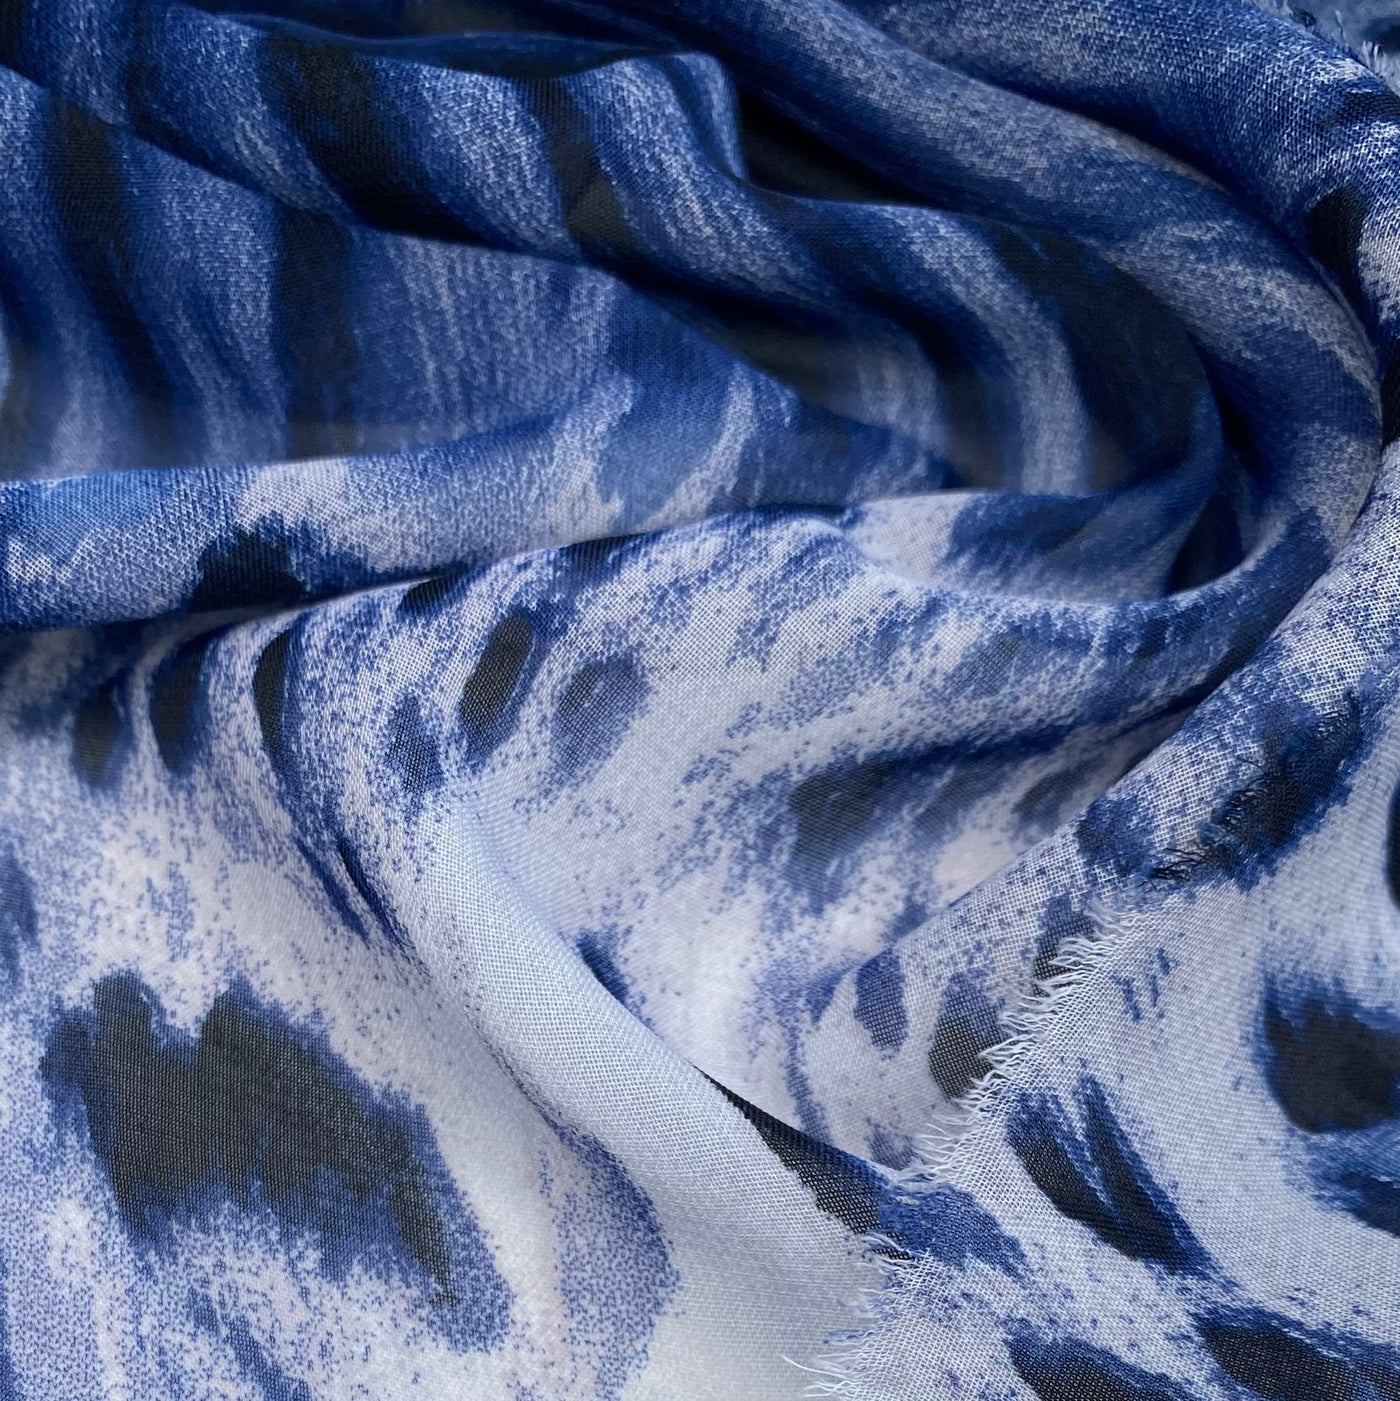 Striped Animal Print Polyester Chiffon - Striped Animal Print Blue